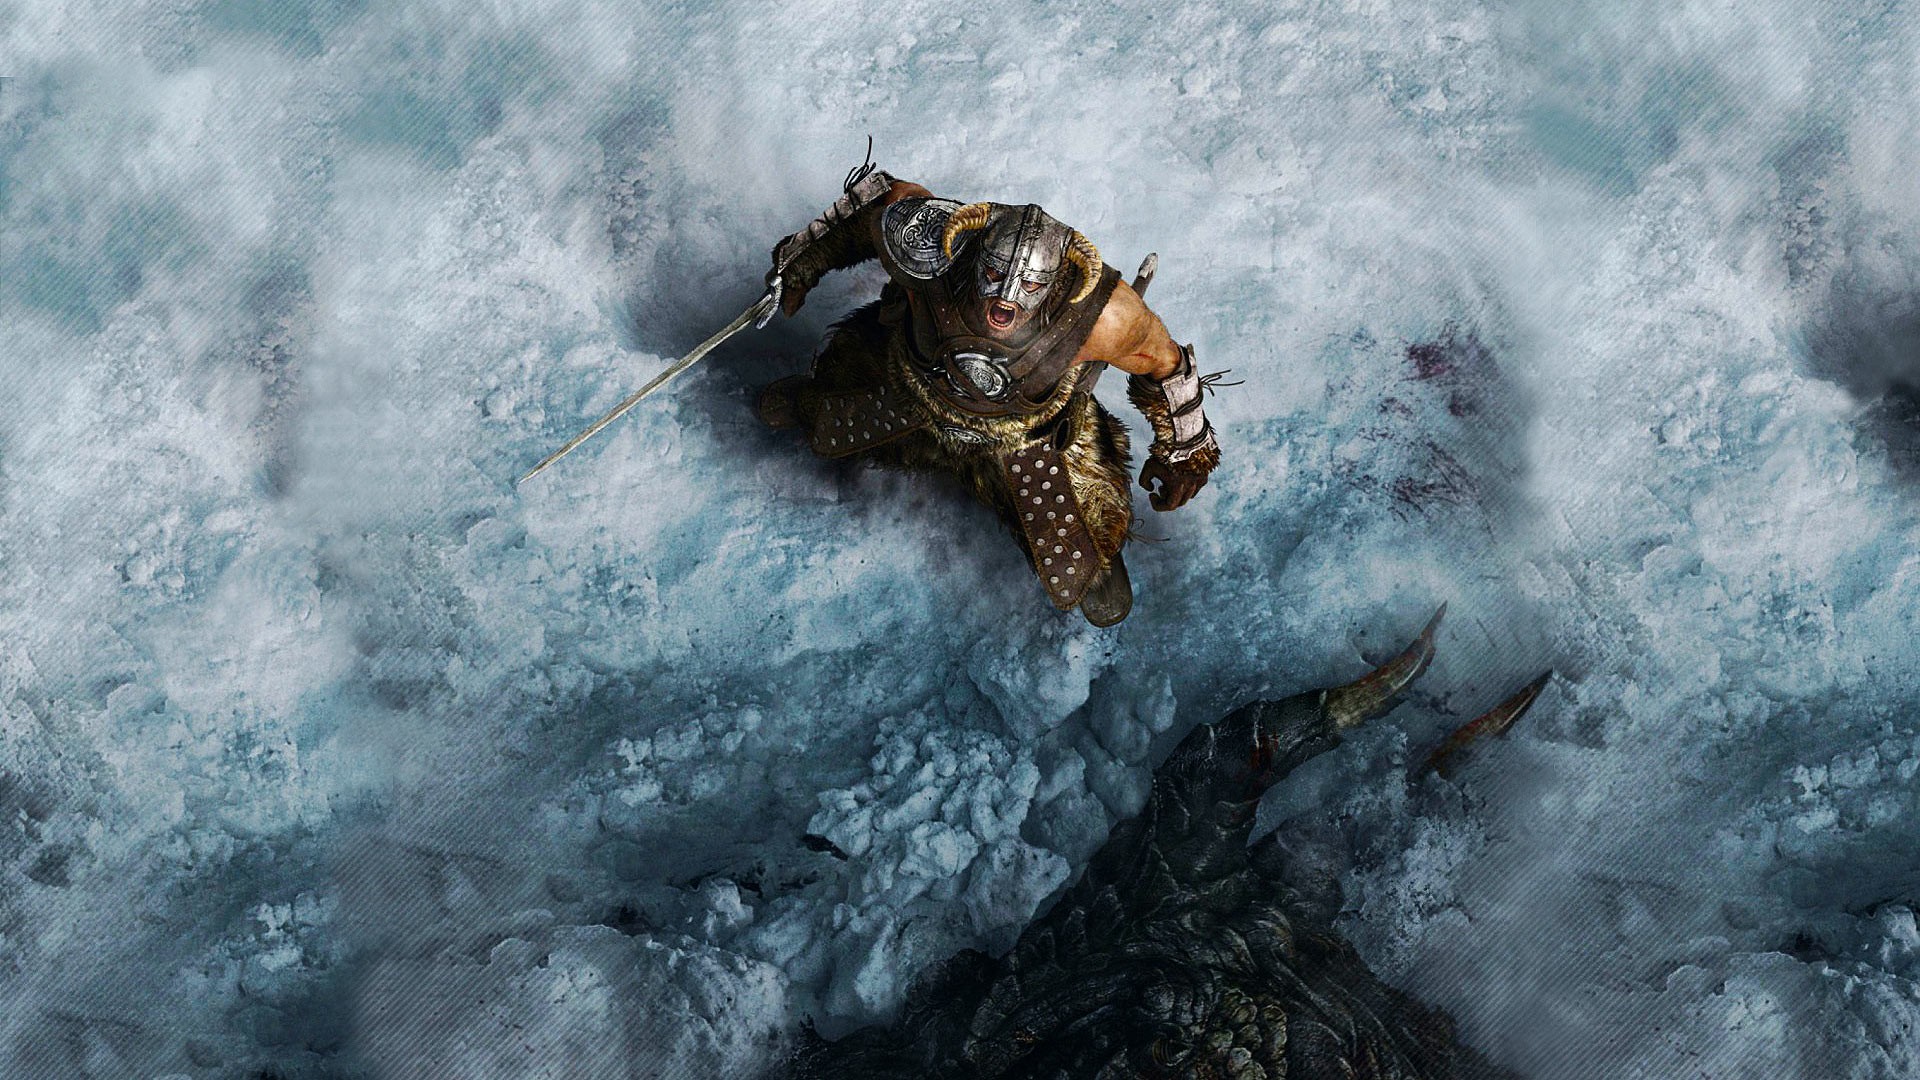 General 1920x1080 The Elder Scrolls V: Skyrim dragon video games warrior snow fantasy men Bethesda Softworks